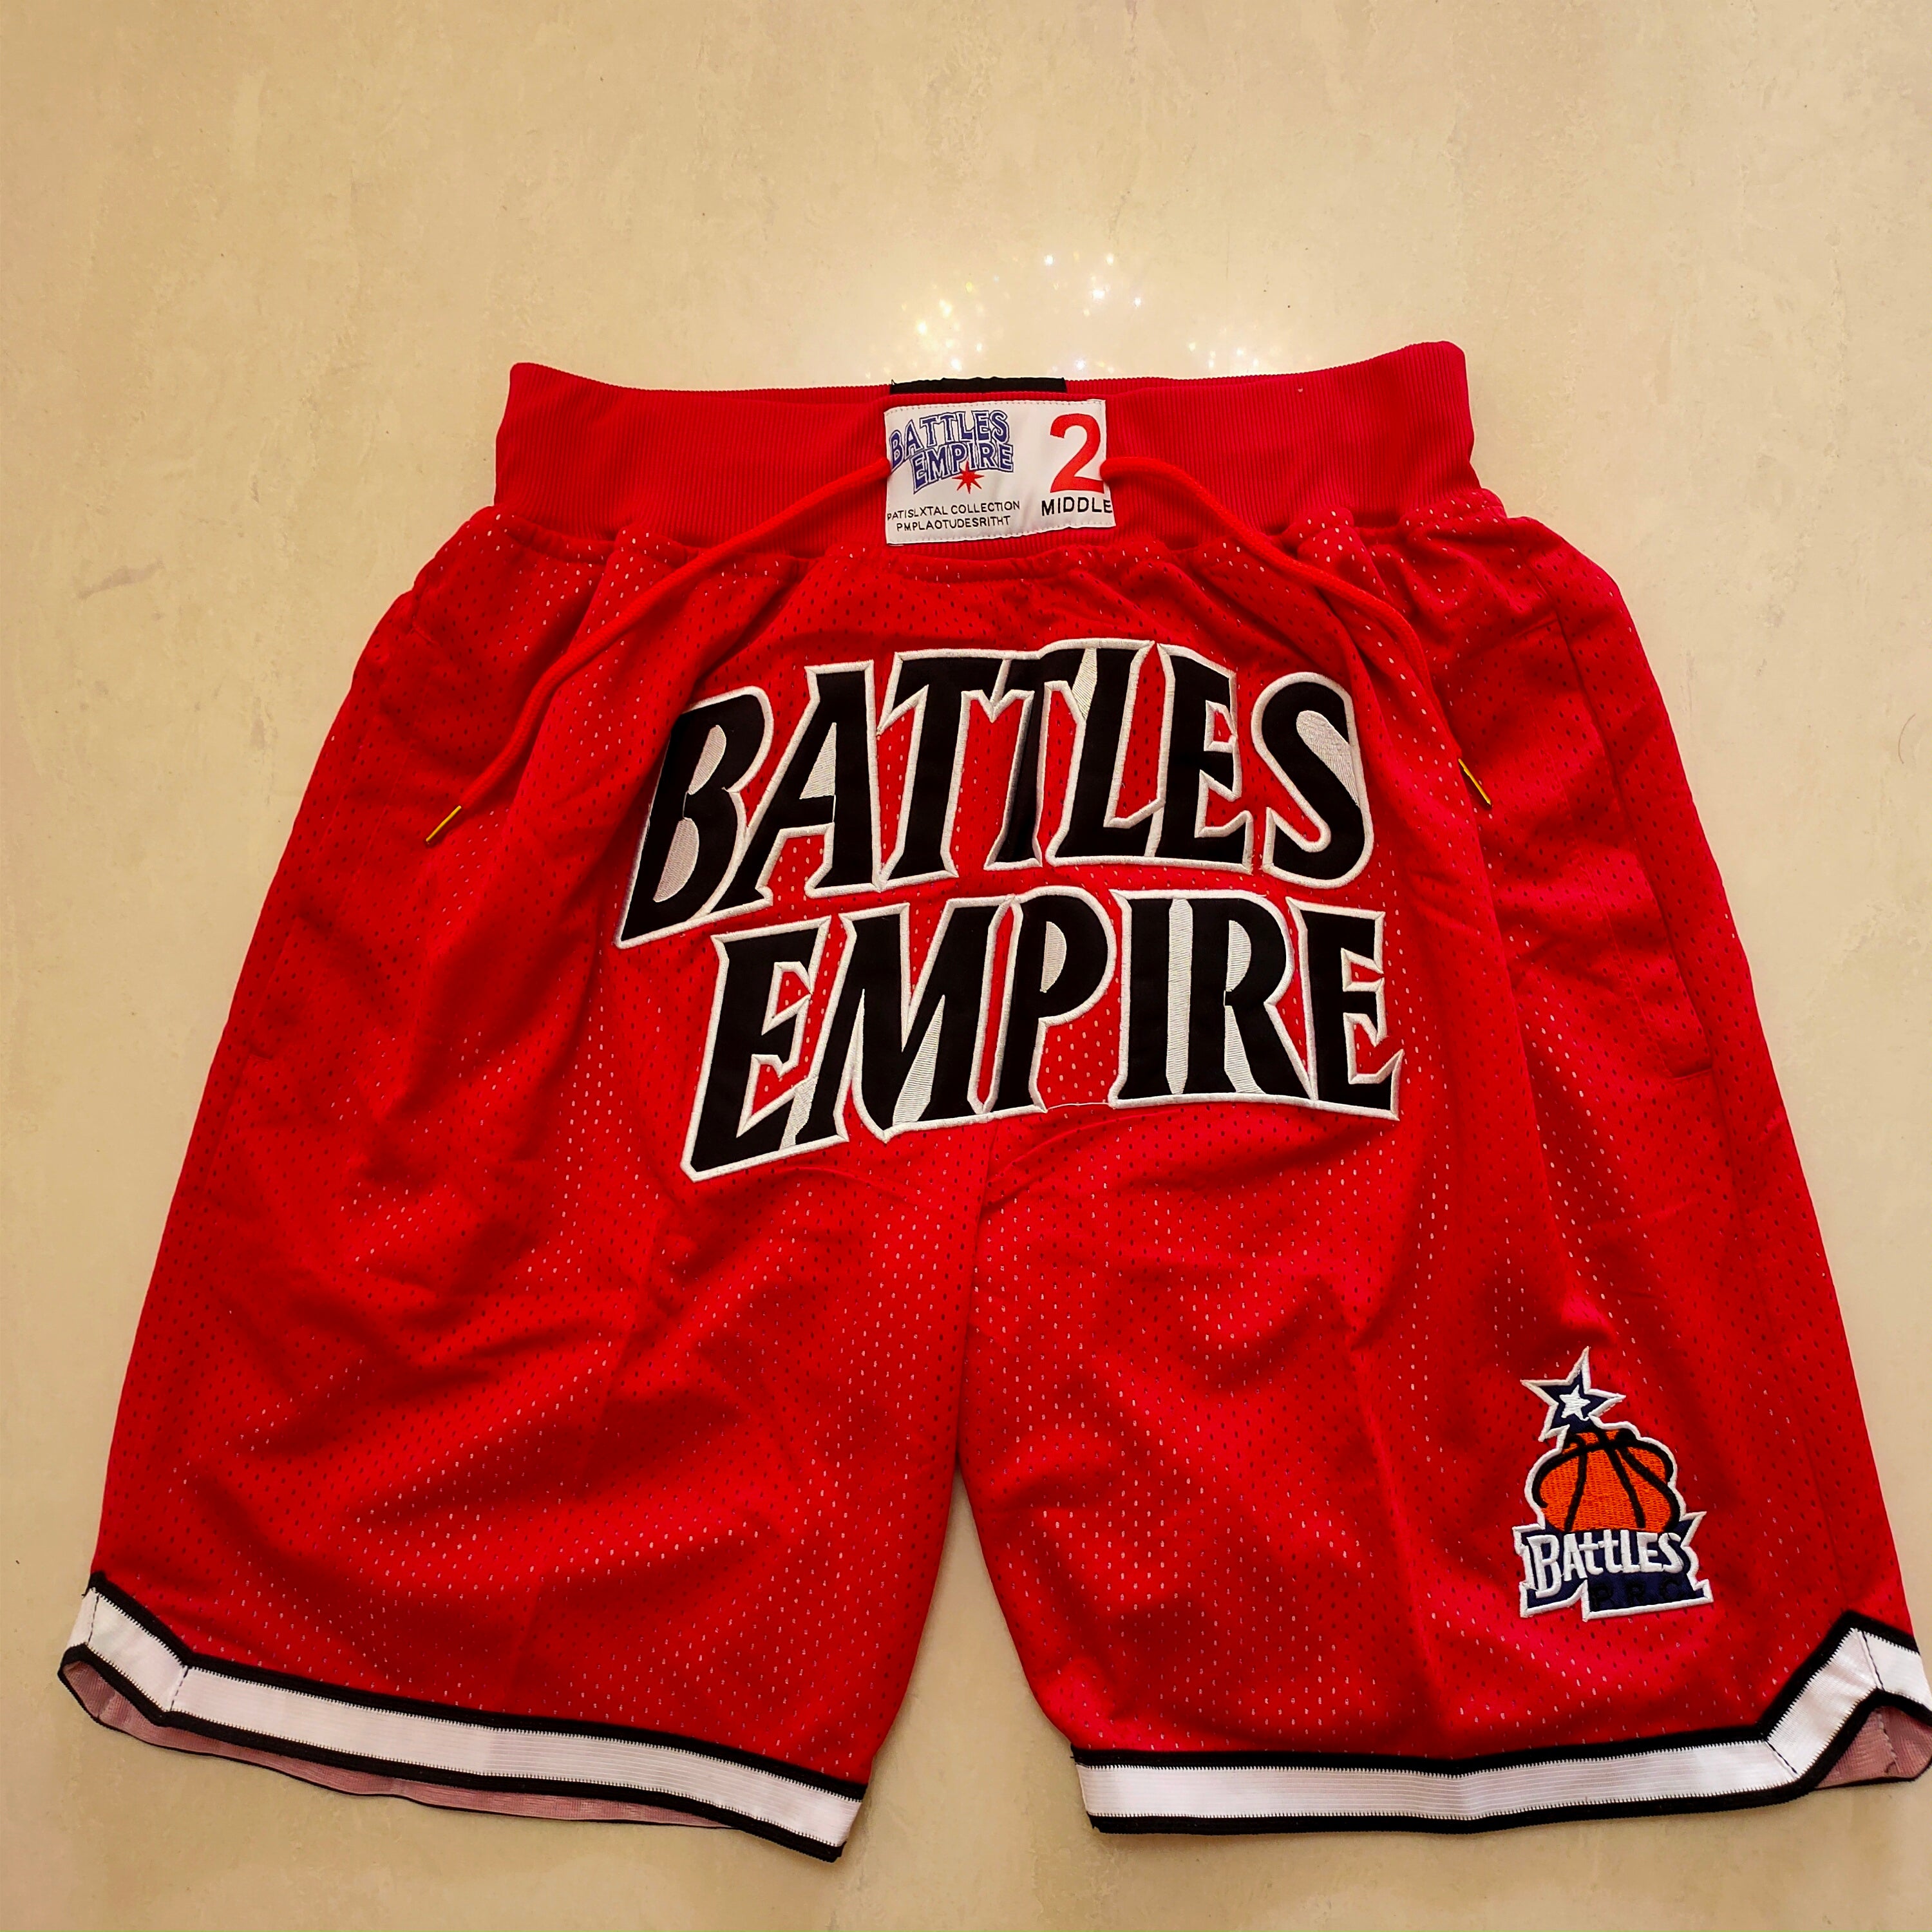 Battles empire red shorts